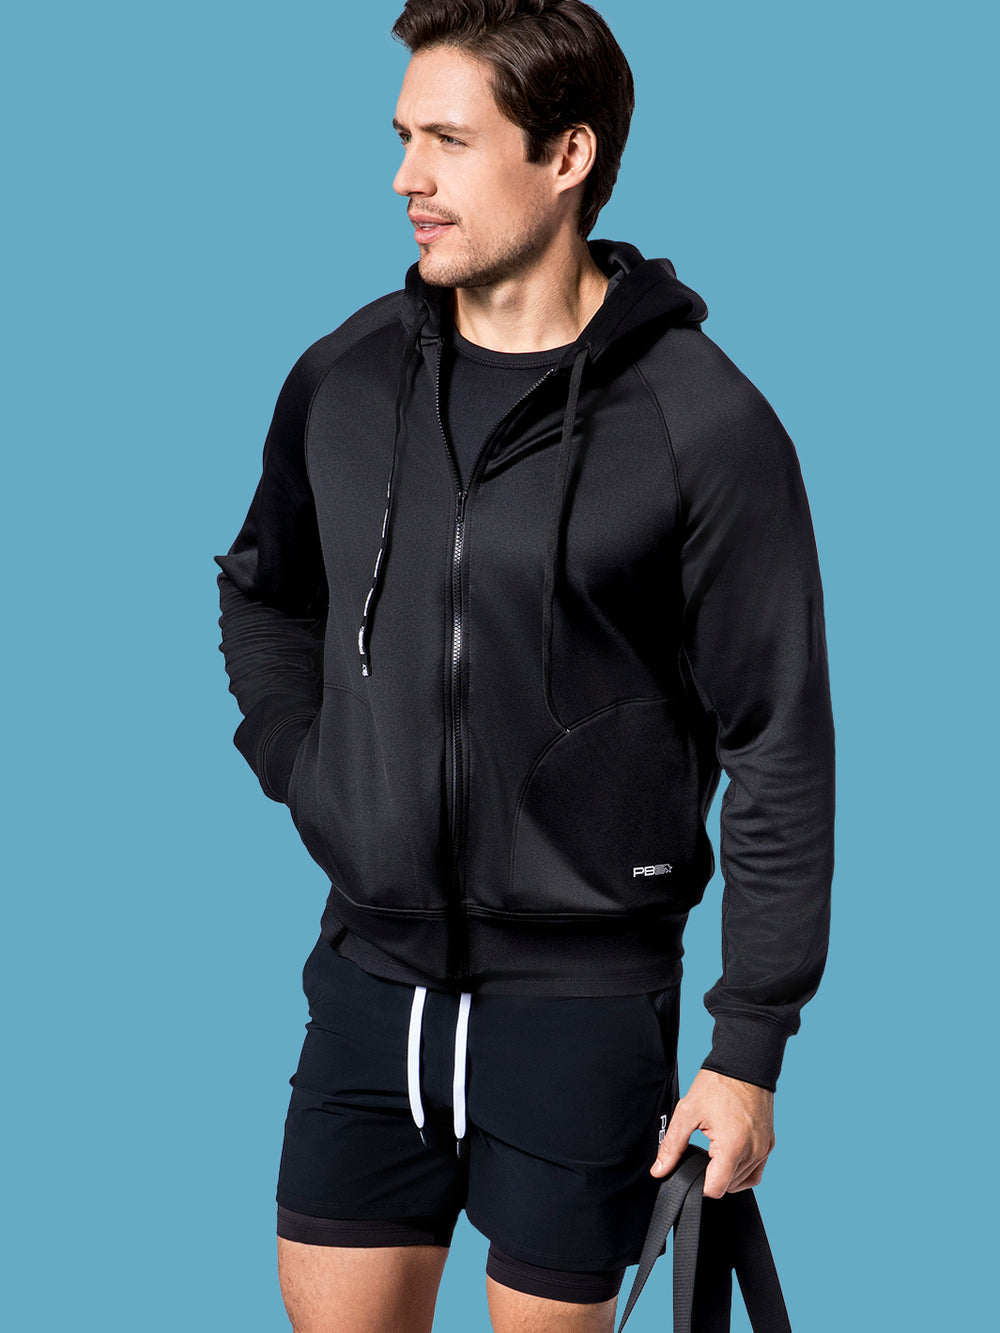 Man modeling a PB5 Star black performance full-zip hoodie with brand logo.